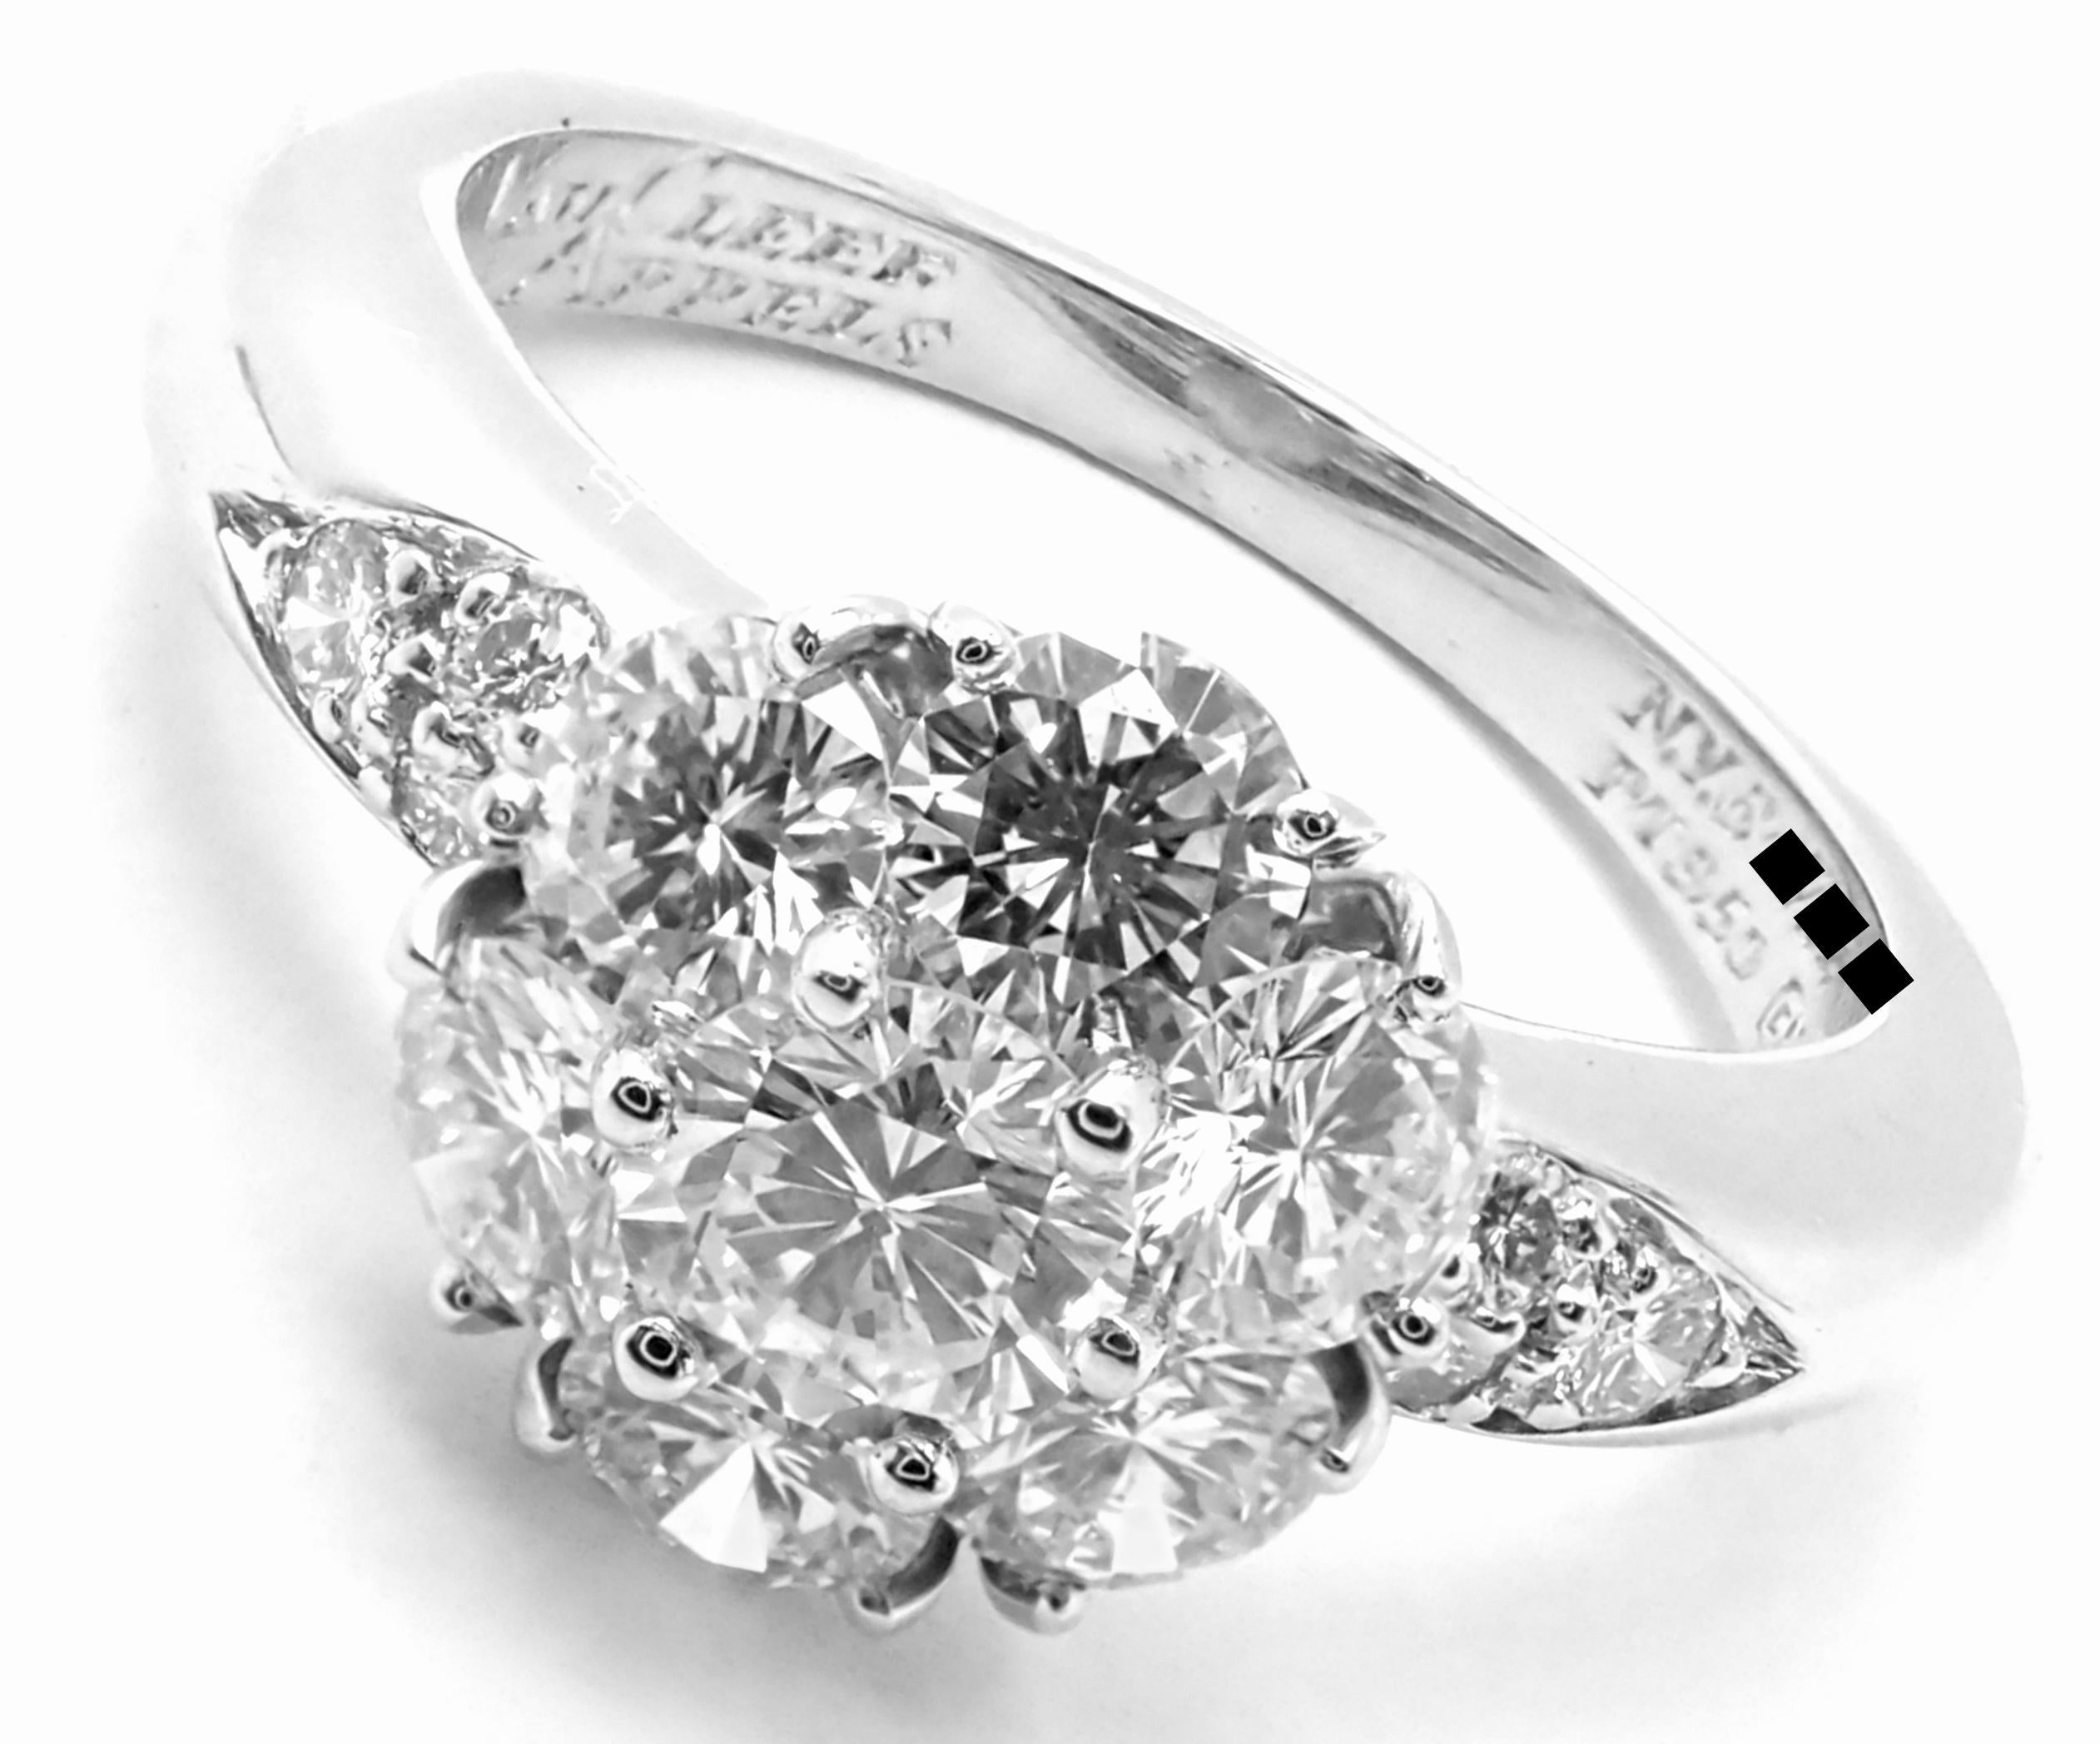 Platinum Diamond Fleurette Flower Ring by Van Cleef & Arpels. 
With 13 Round brilliant cut diamonds total weight approximately 1.13ct E/VVS1
Details:
Size 5
Width: 9.5mm
Weight: 7 grams
Stamped Hallmarks: Van Cleef & Arpels PT950 N.Y.6XXXX(serial